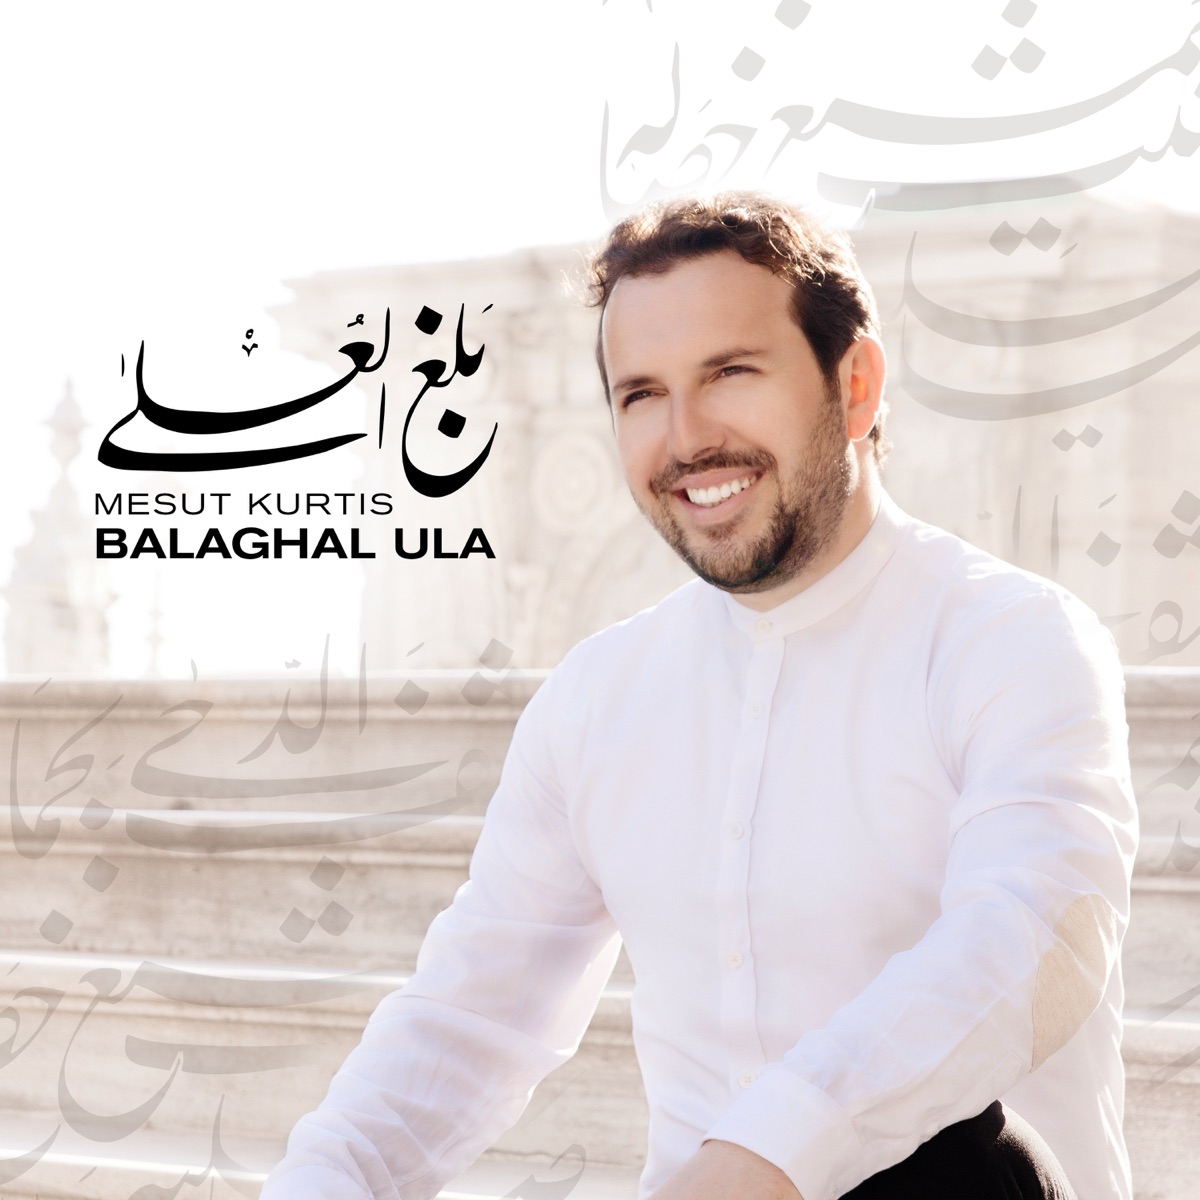 Balaghal Ula - Album by Mesut Kurtis - Apple Music